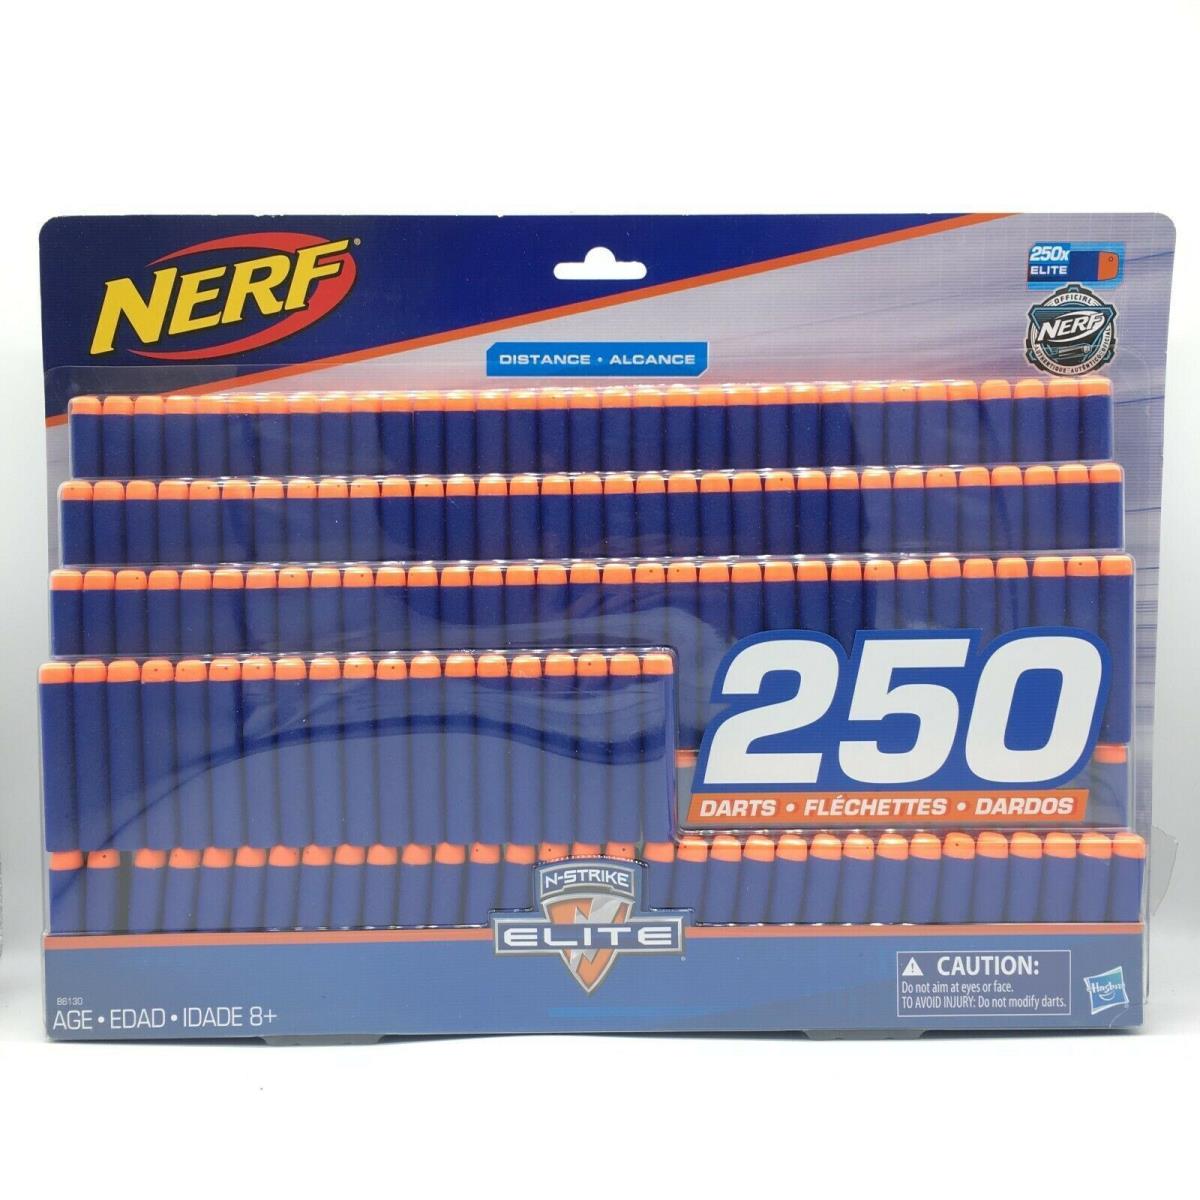 Official Nerf N-strike Elite Series 250 Dart Refill Distance Darts